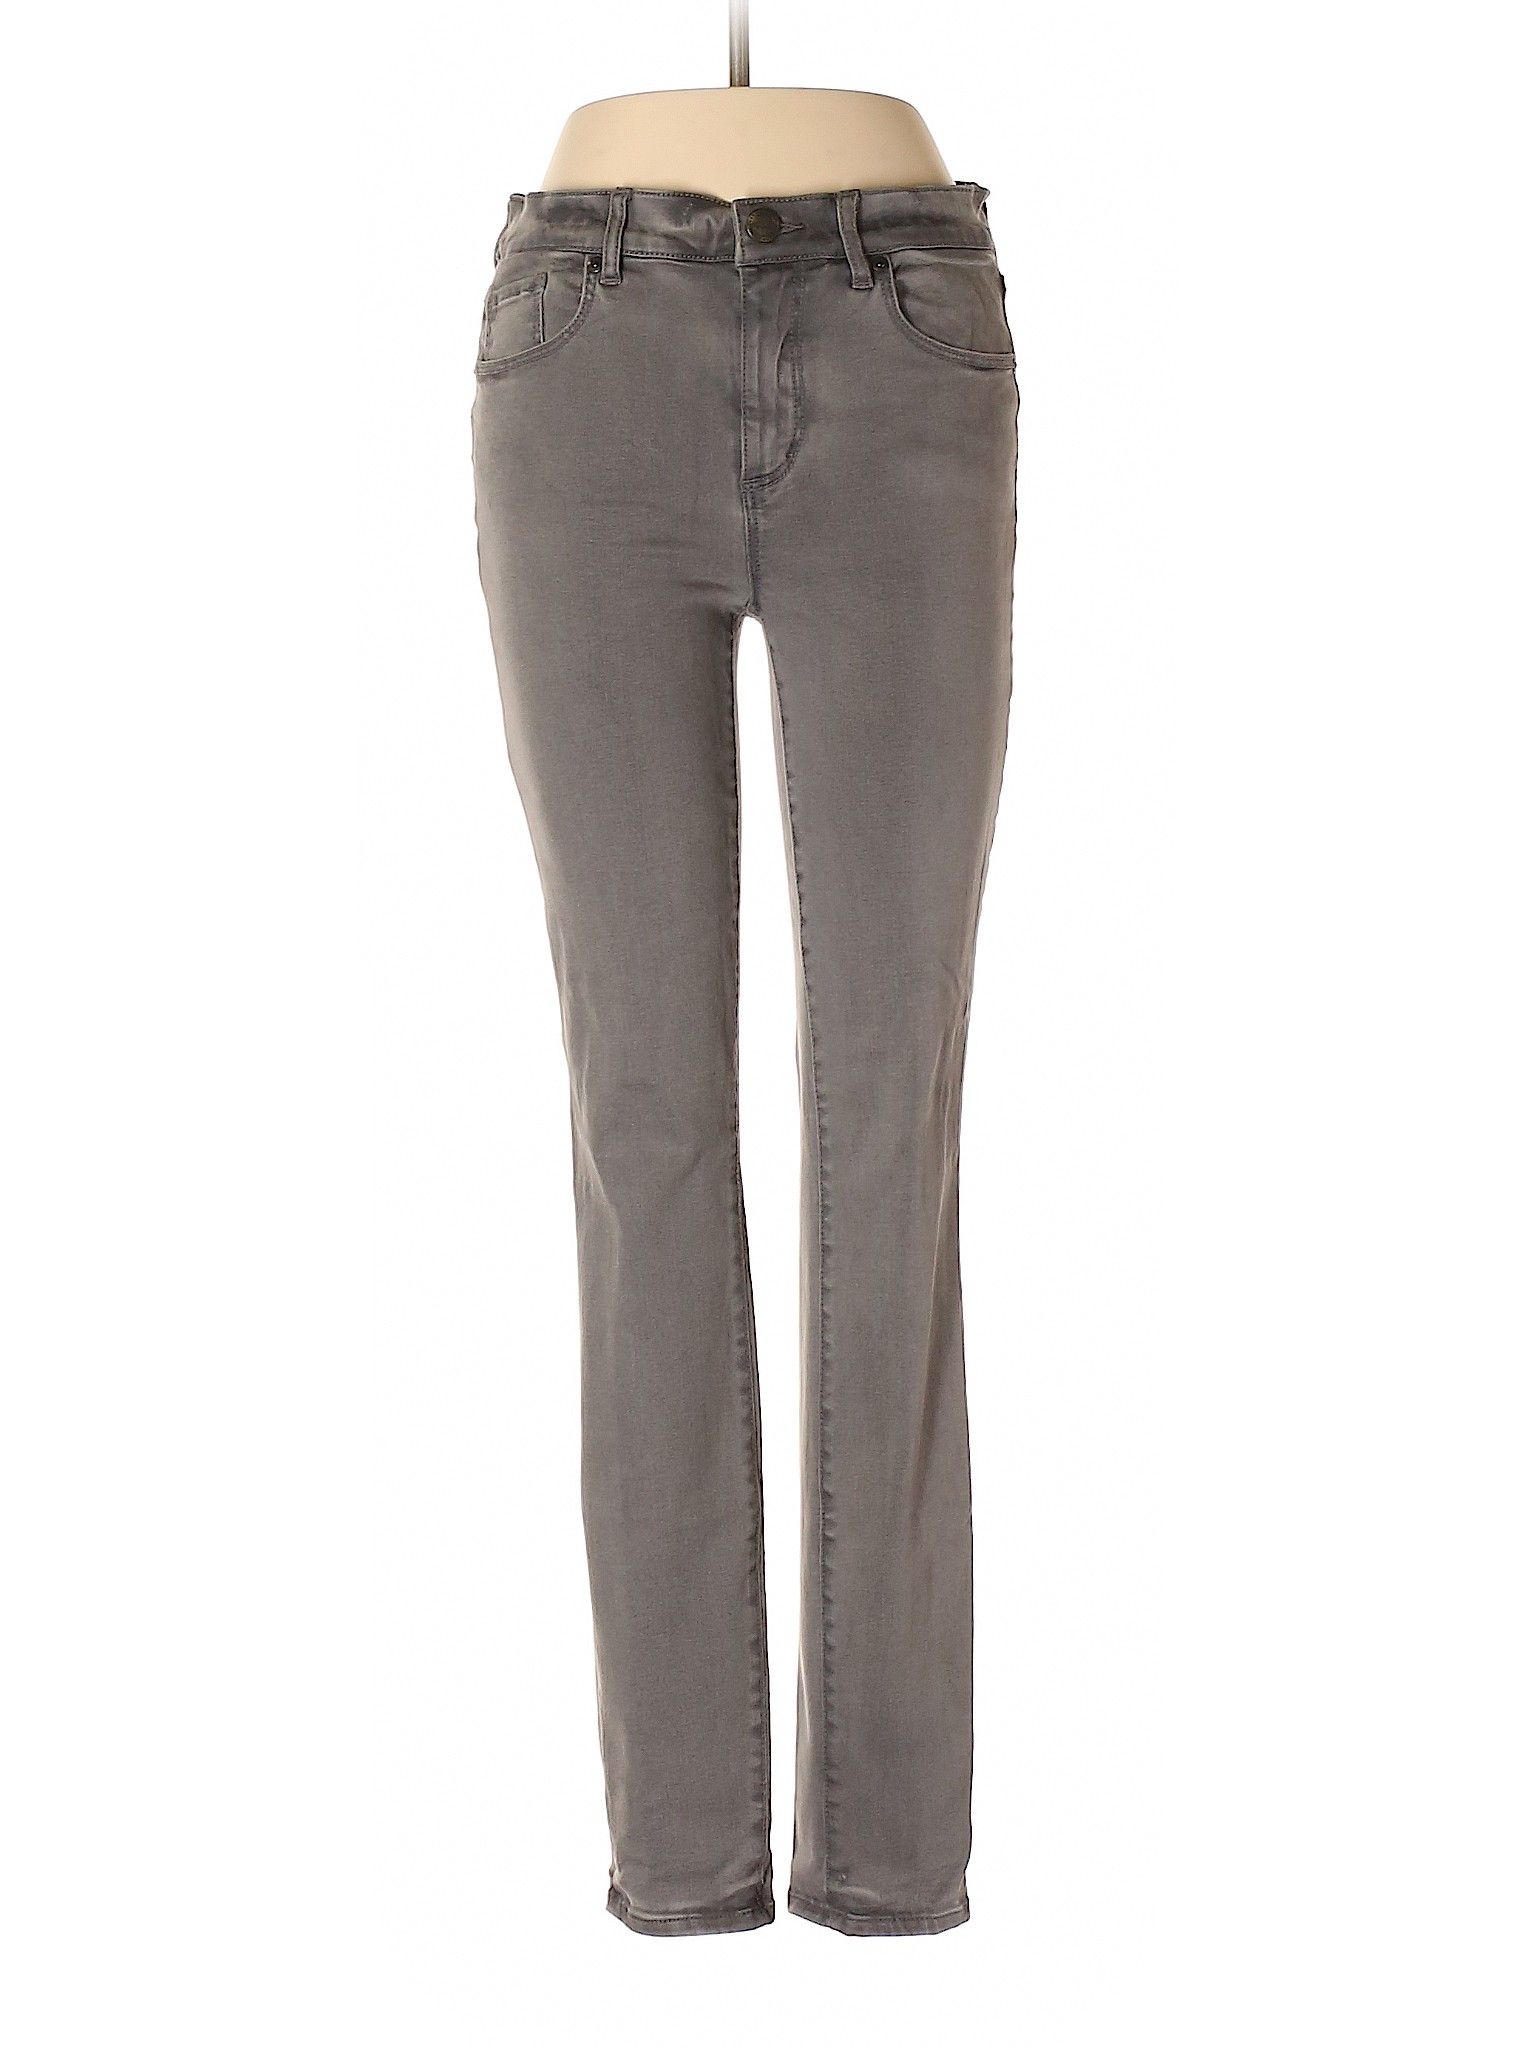 LOFT design by... Jeans Size 6: Gray Women's Bottoms - 45831558 | thredUP